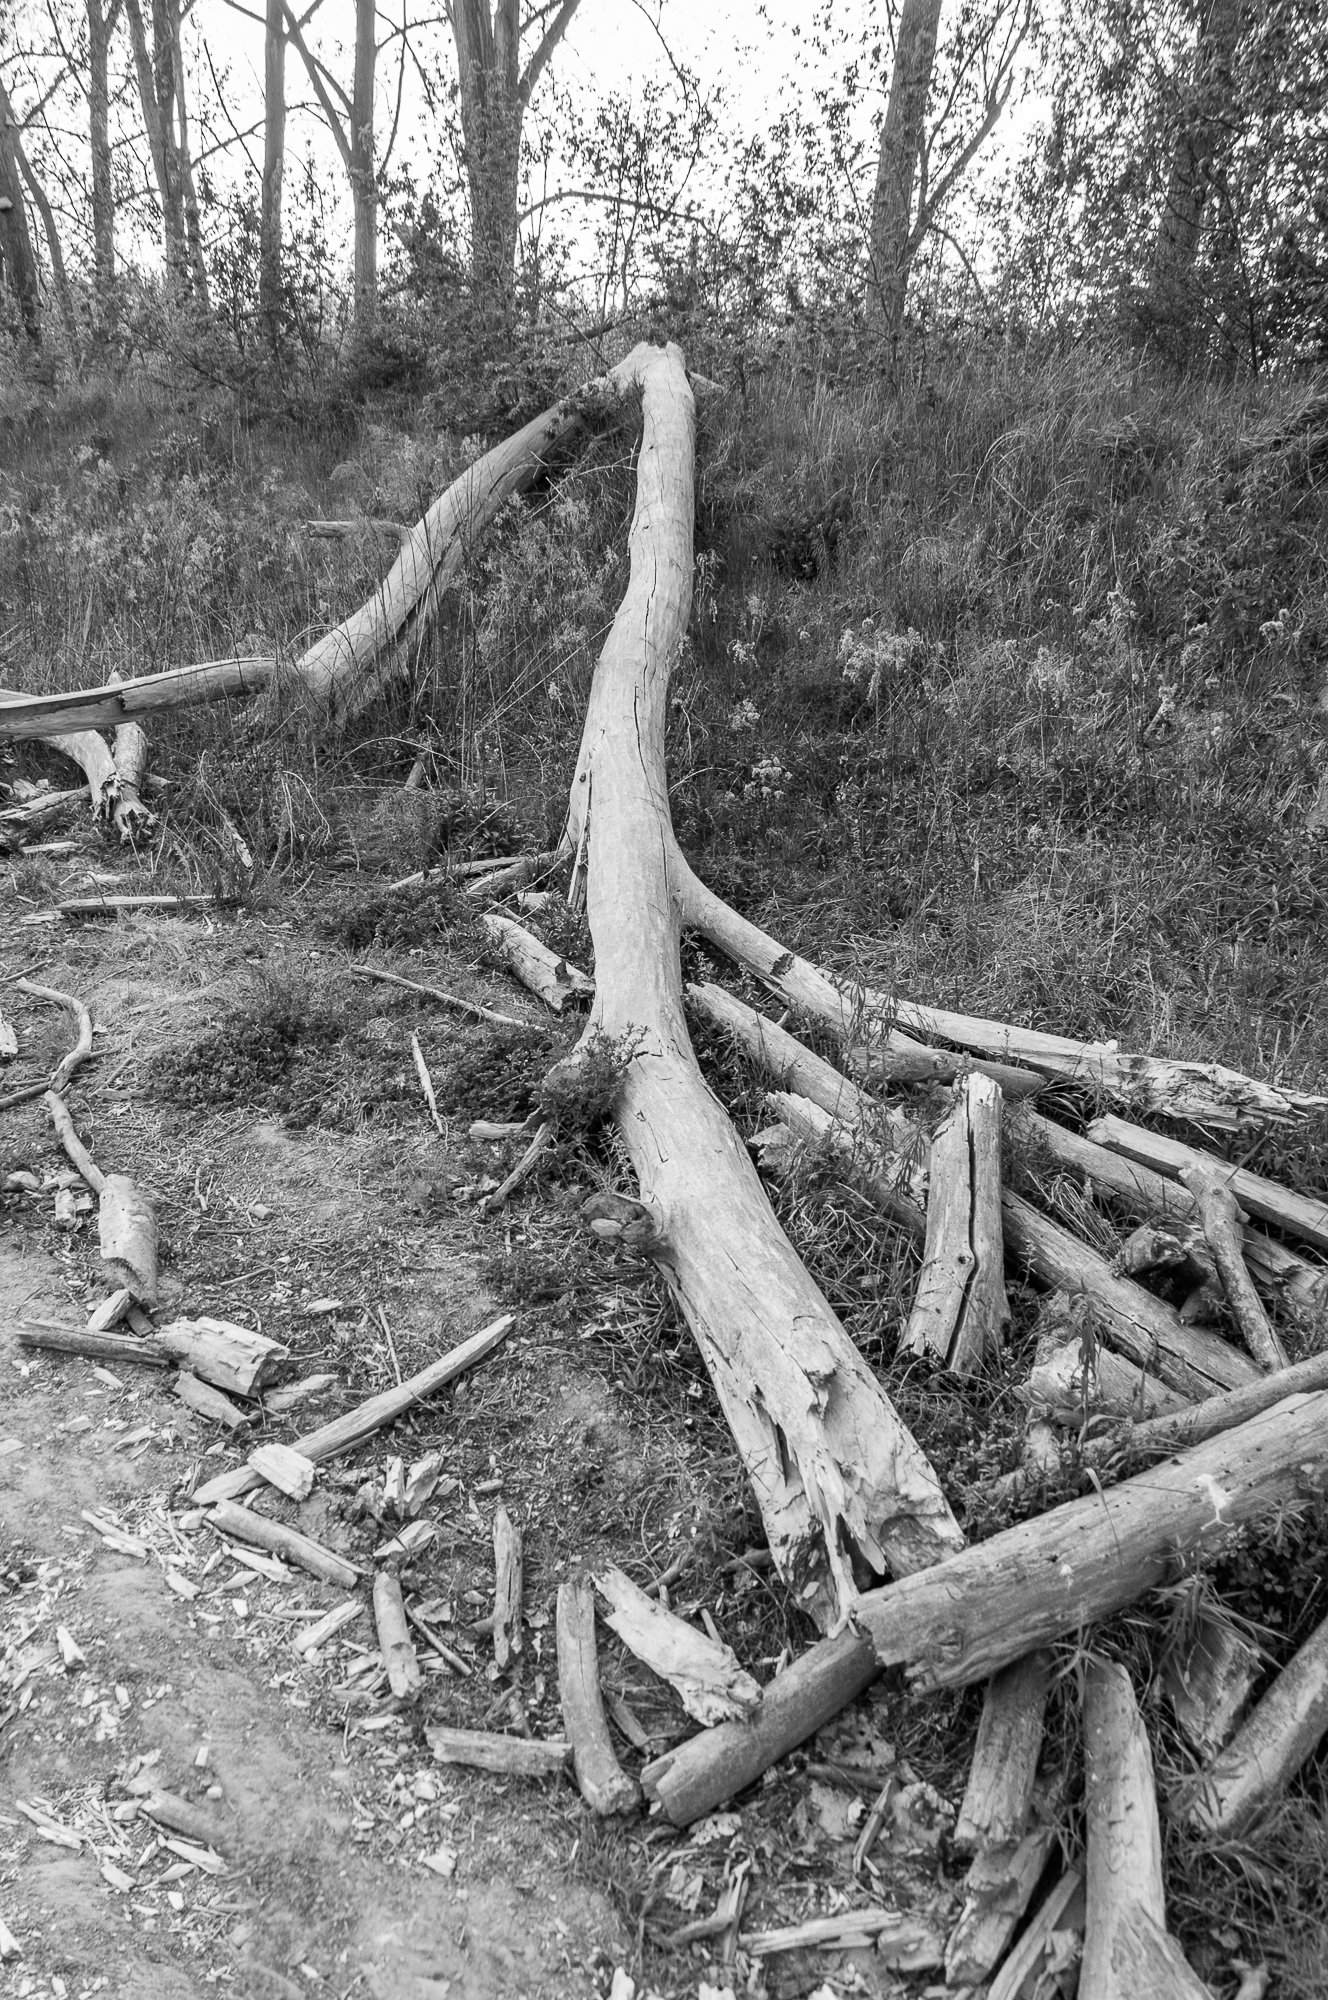 Adam Mazek Photography Warsaw (Warszawa) 2020. Post: "War." Minimalism. Broken tree.